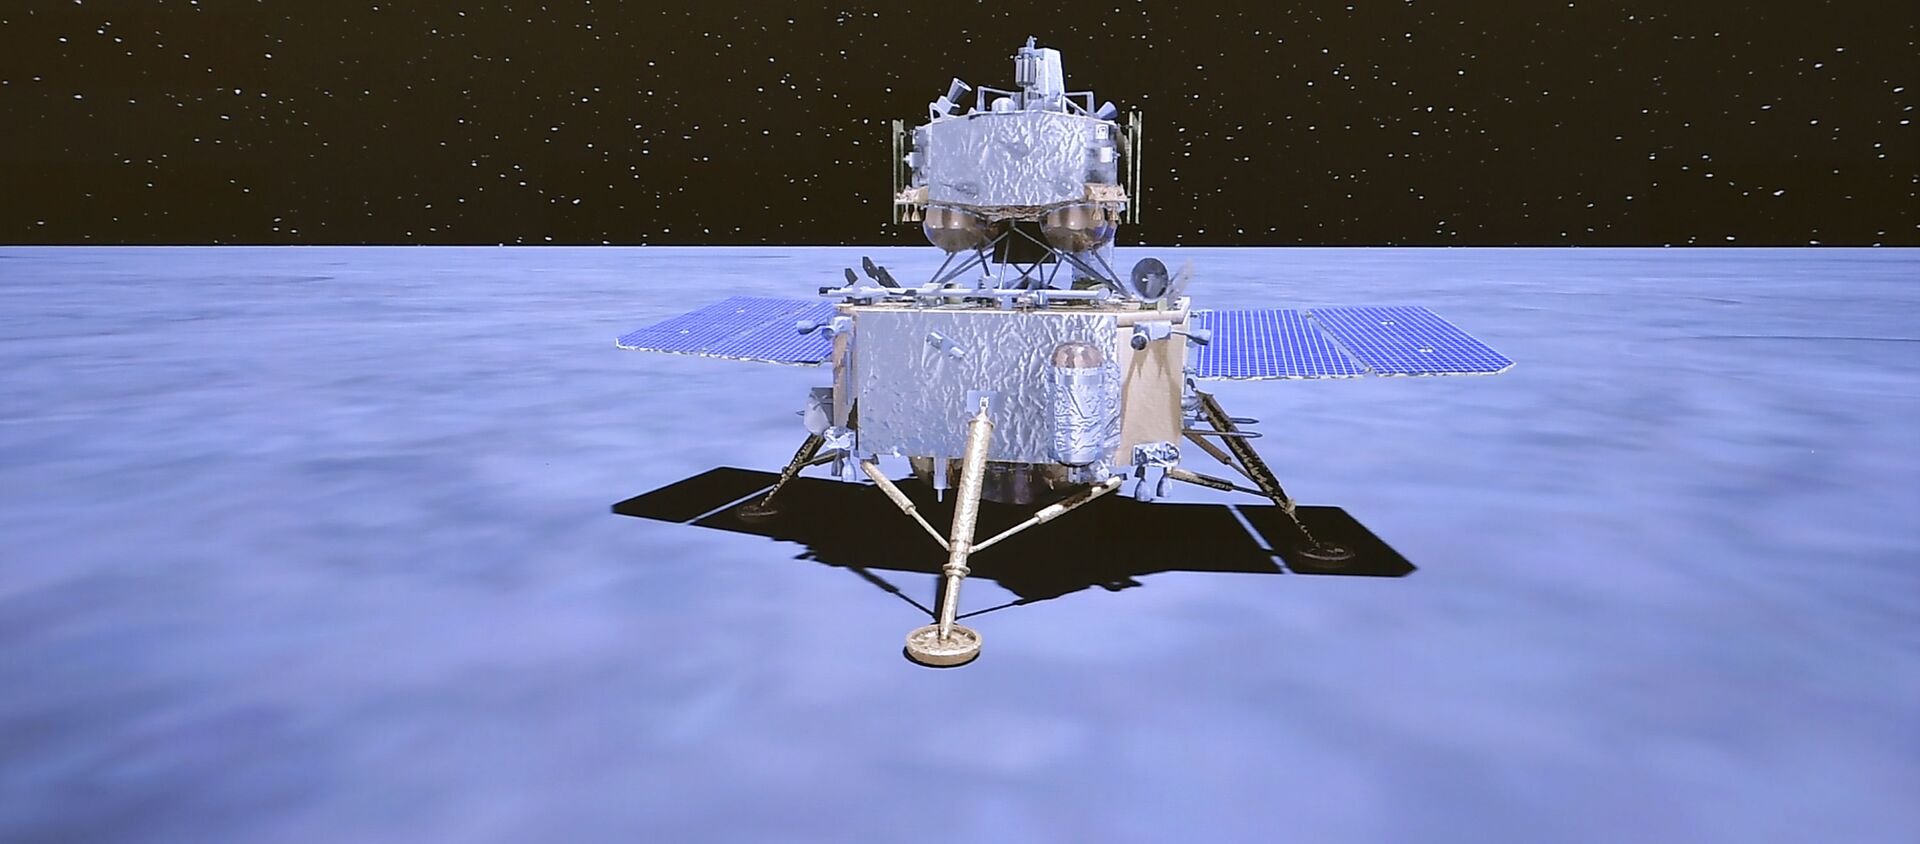 Китайский зонд Чанъэ-5 совершил успешную посадку на поверхности Луны. - Sputnik 日本, 1920, 02.12.2020